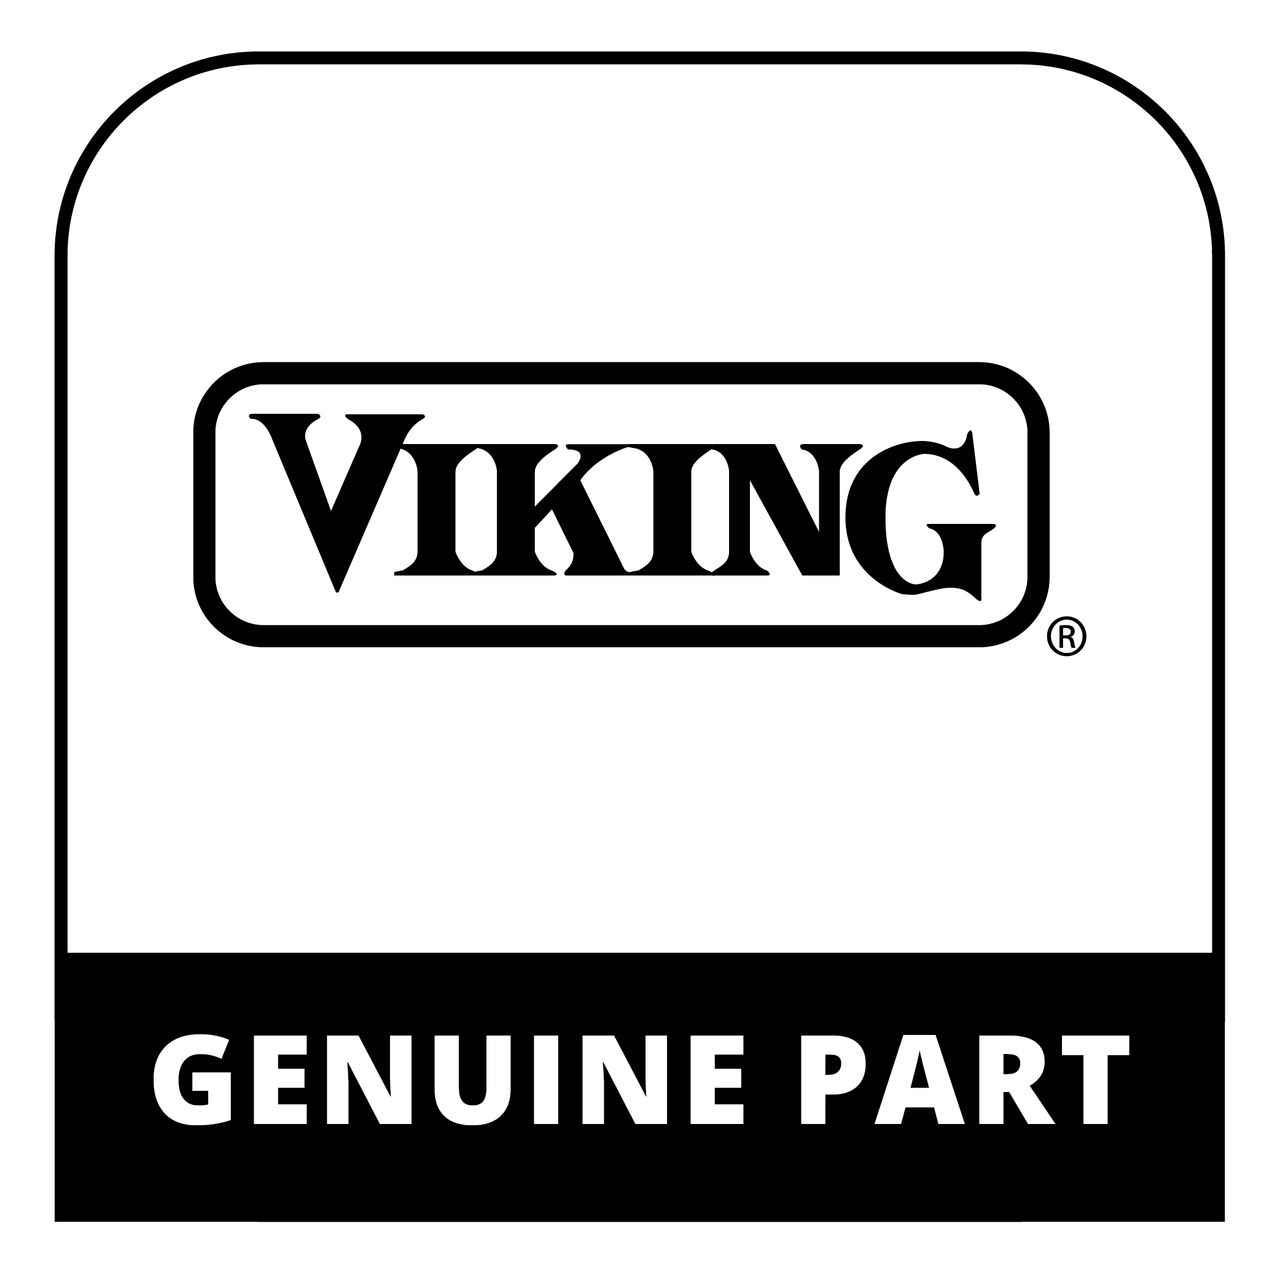 Viking 064623-000 - Bottom, Evap, Cover, 36 Af 7 Series - Genuine Viking Part